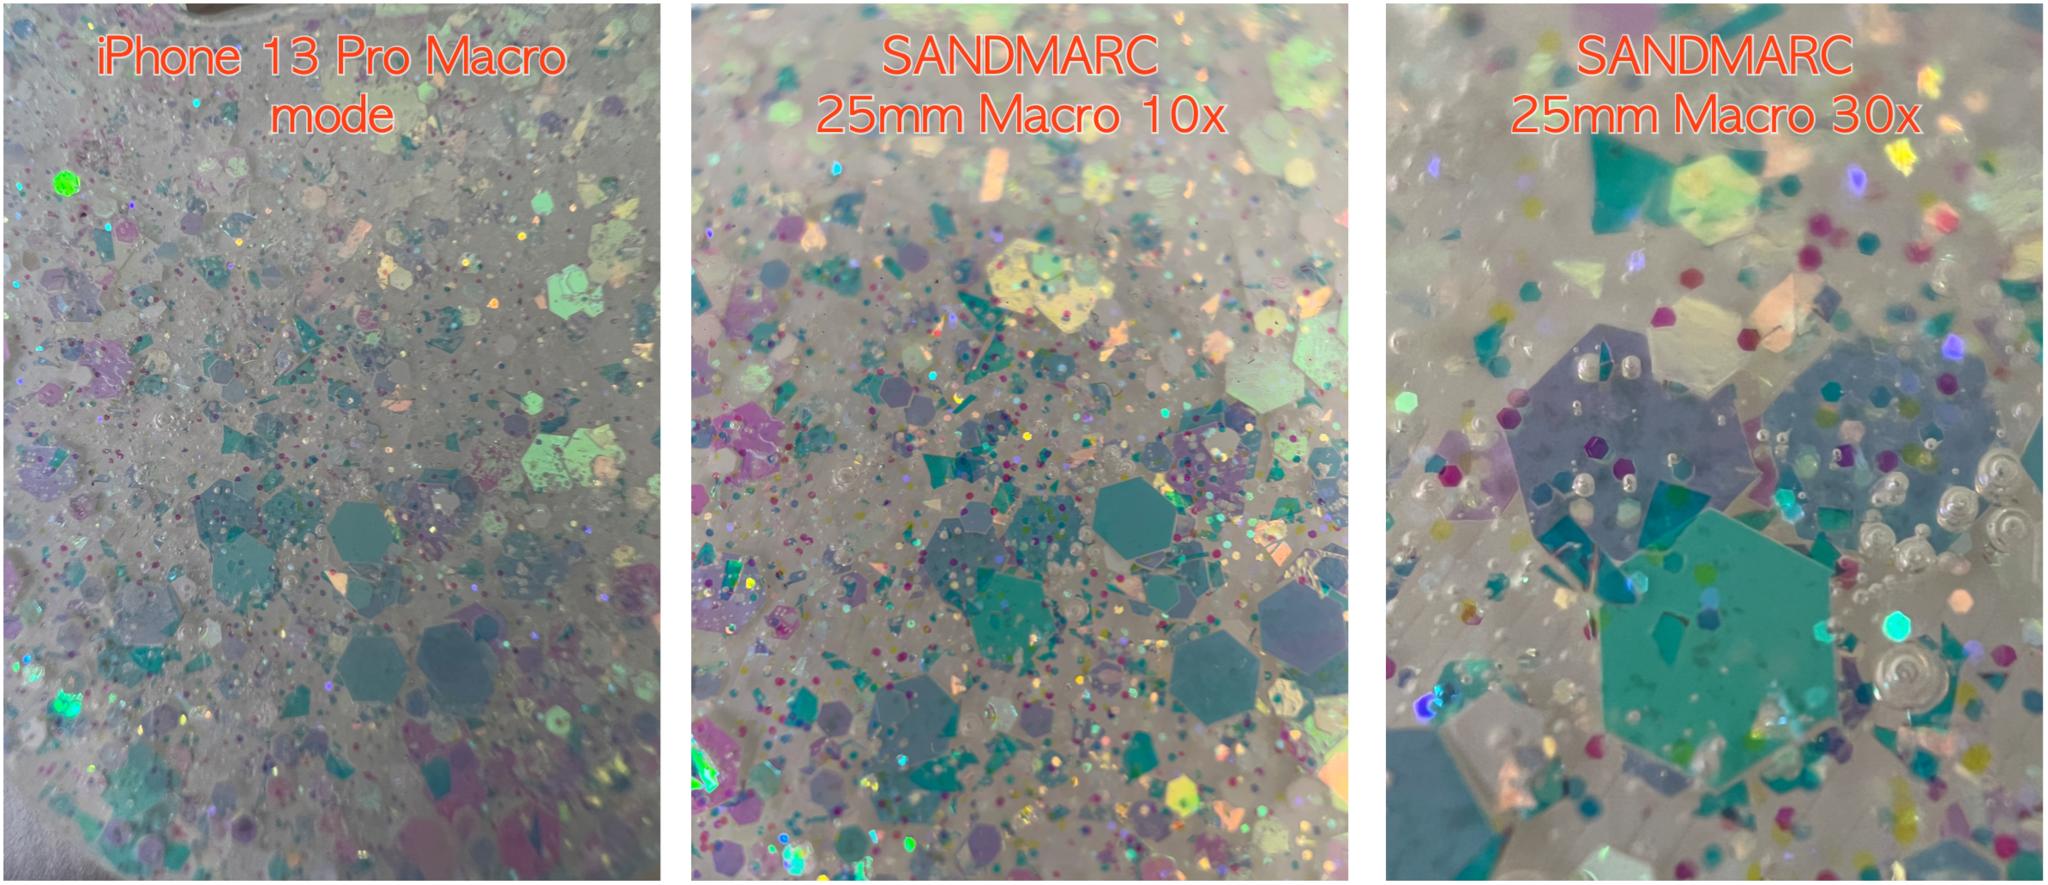 Sandmarc Macro Lens Comparison